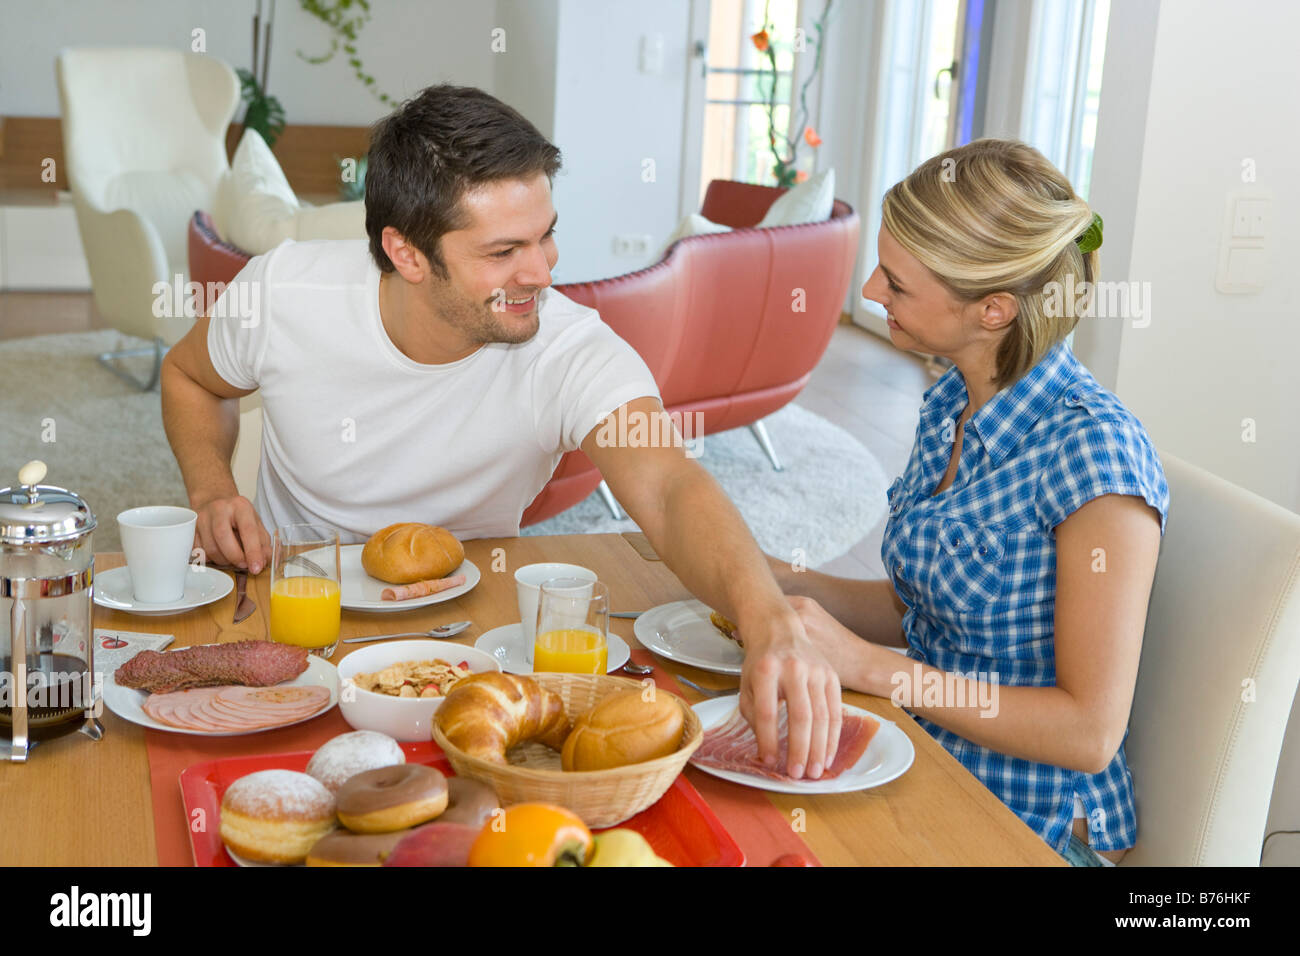 Paar beim gemeinsamen Fruehstueck, giovane avente insieme per la prima colazione Foto Stock